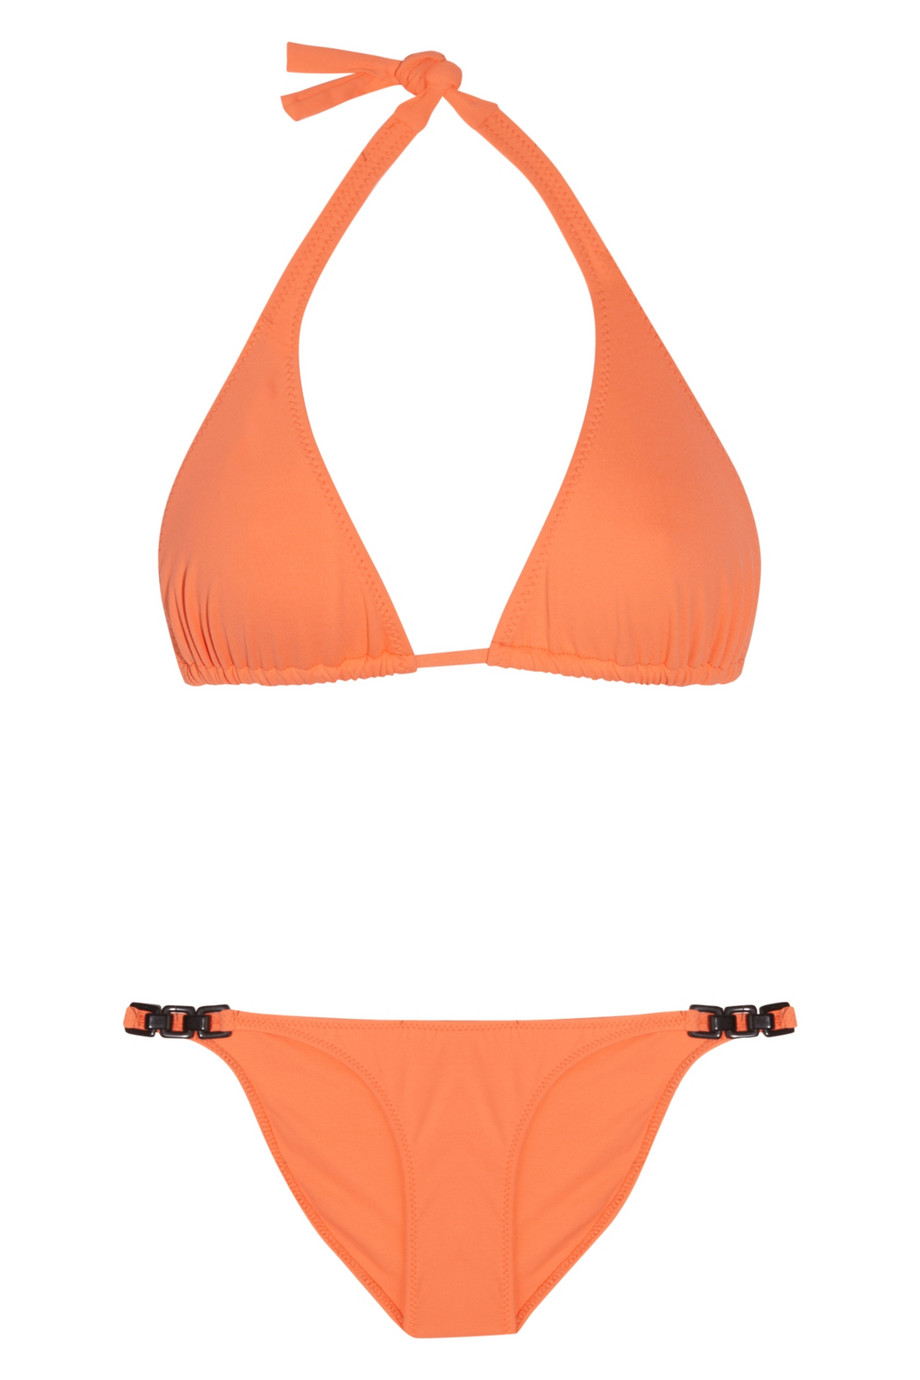 Melissa Odabash Egypt Halterneck Bikini in Pastel Orange (Orange) - Lyst